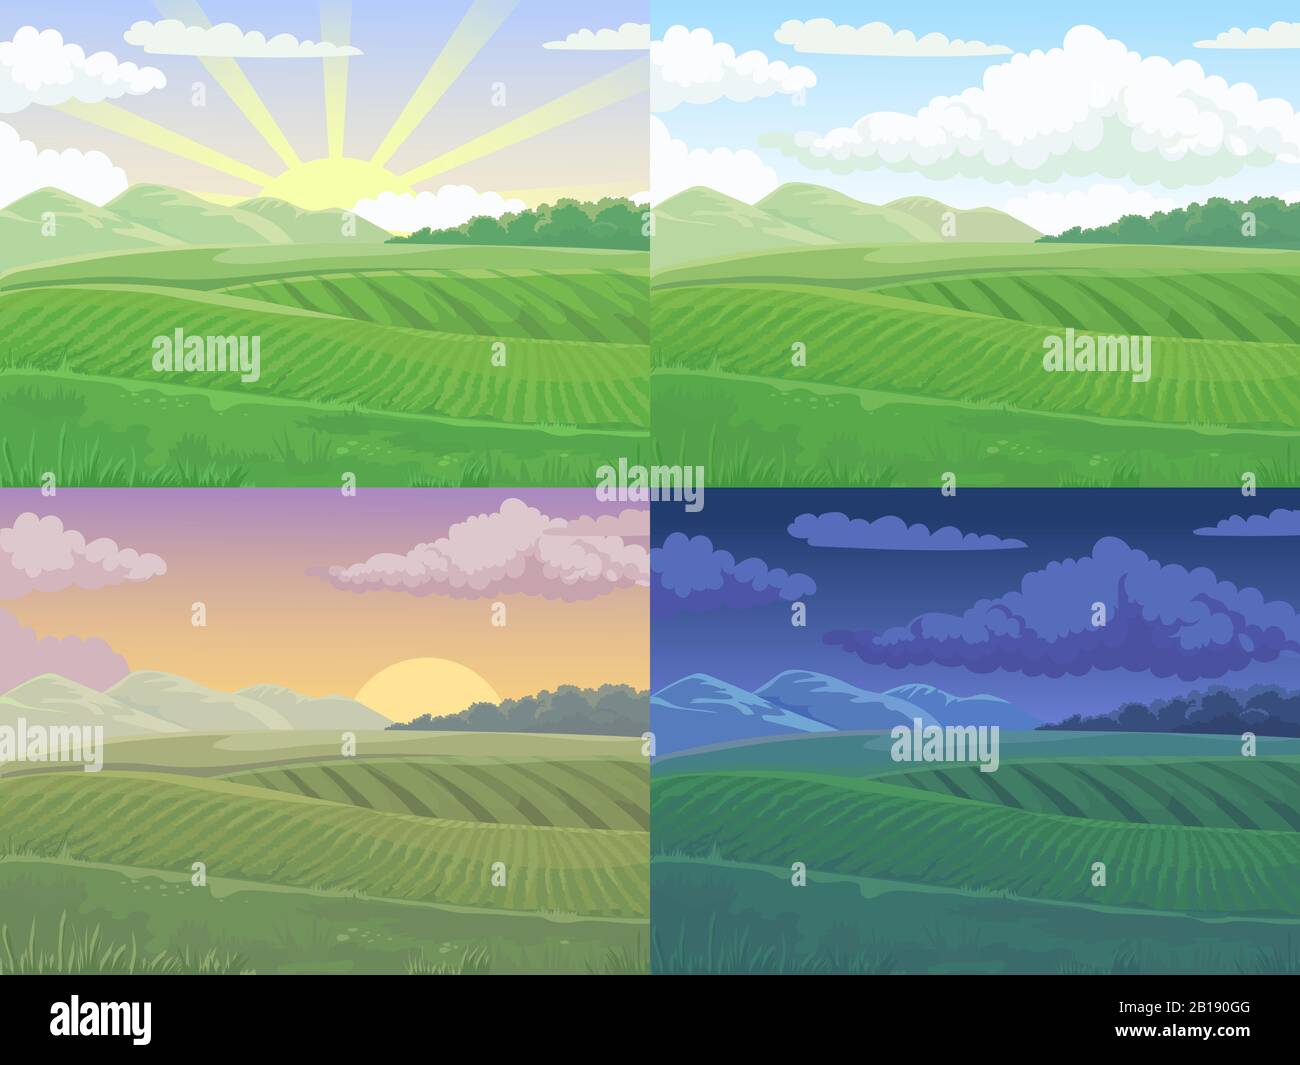 Sommerfeld. Grüner Hügel, Tagfelder Landschaft und Frühlingshügel Cartoon-Vektor-Illustration Hintergrund Stock Vektor